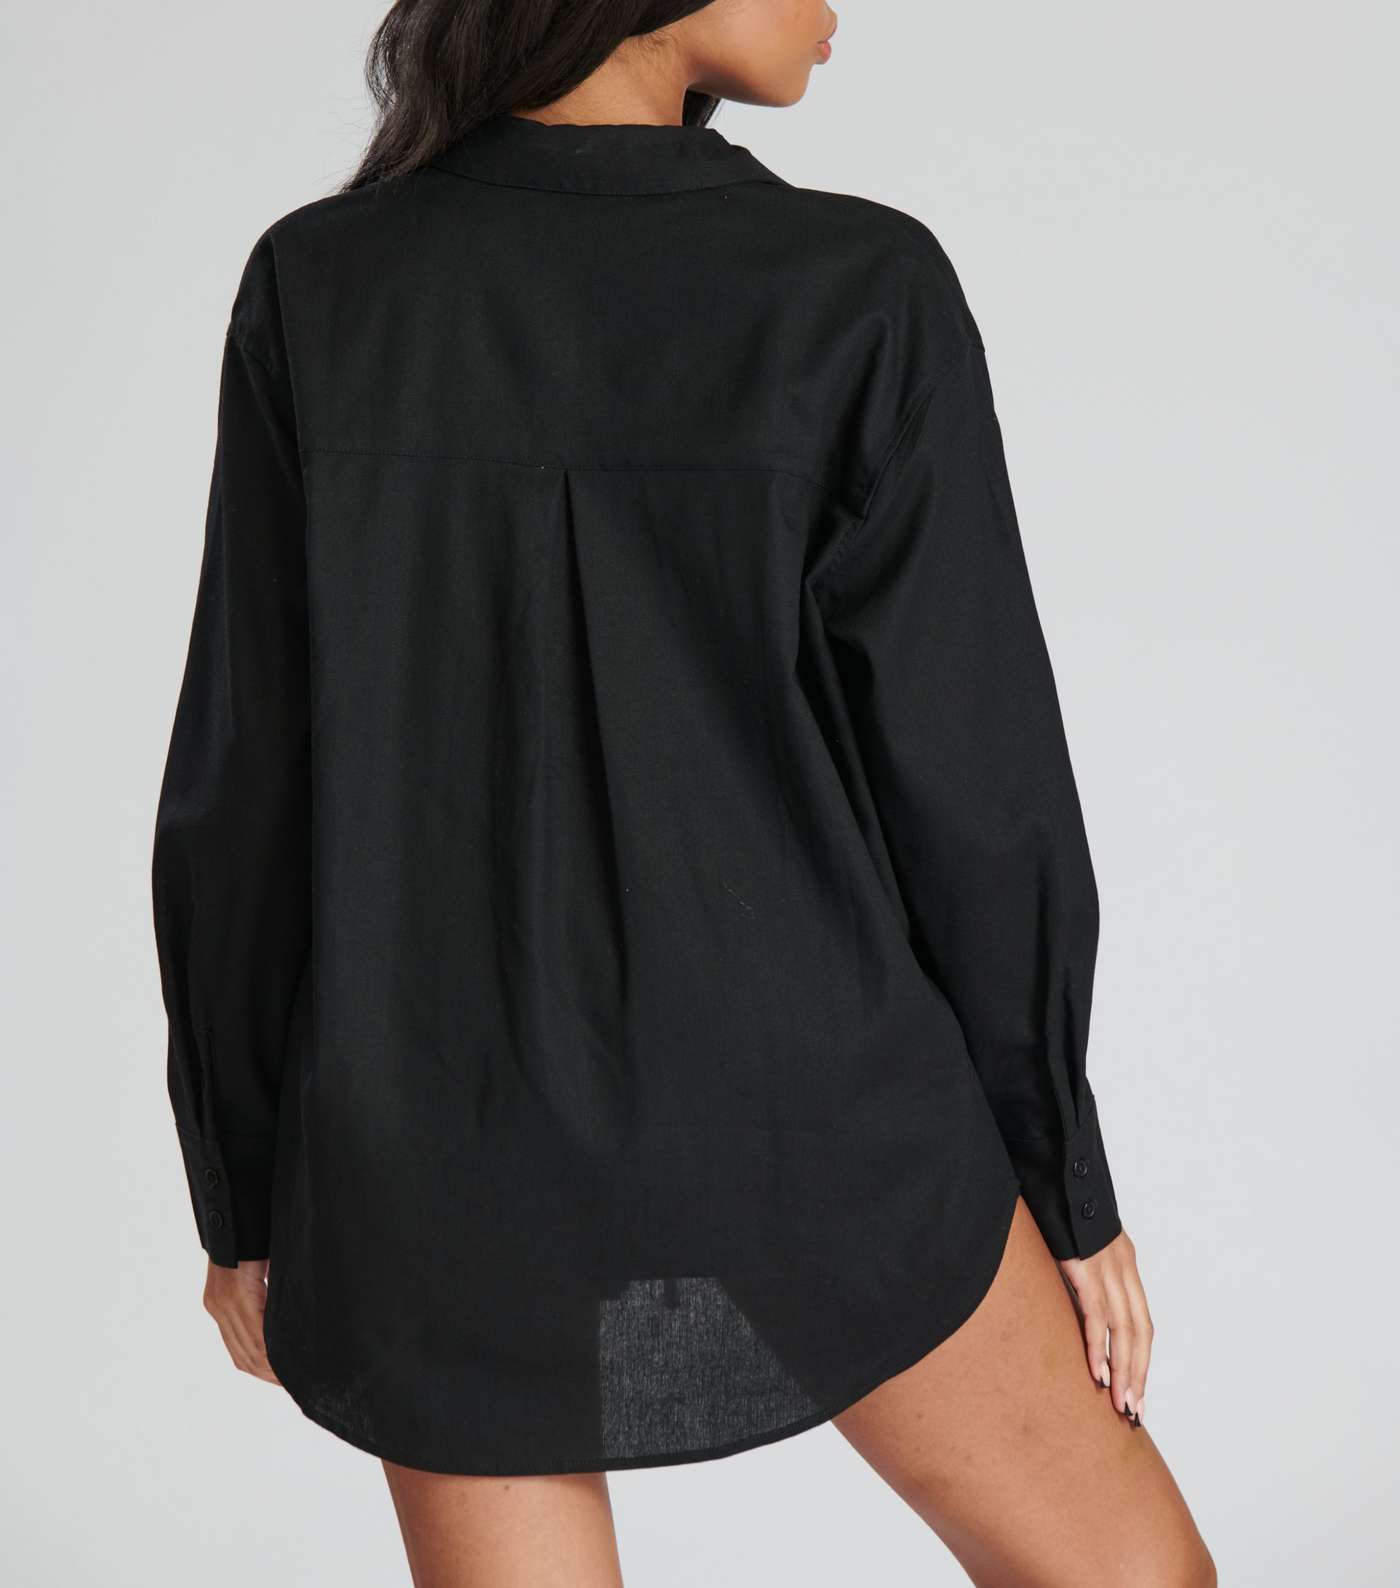 South Beach Black Linen-Look Oversized Shirt Image 4